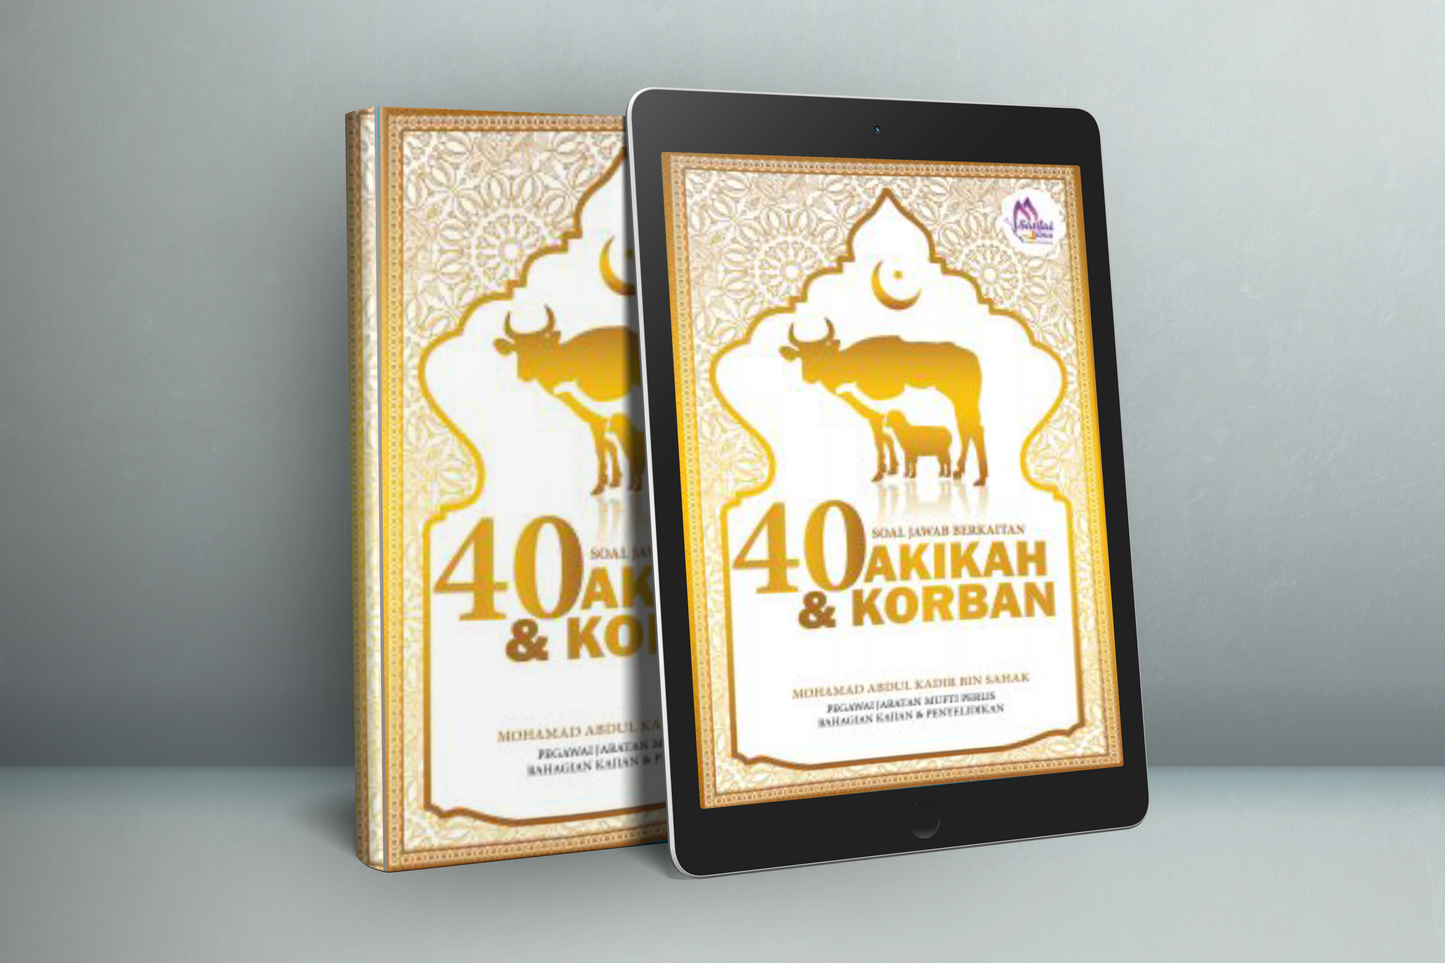 Akikah & Korban - Soal Jawab Berkaitan l Ustaz Abdul Kadir Sahak l Santai Ilmu Publication